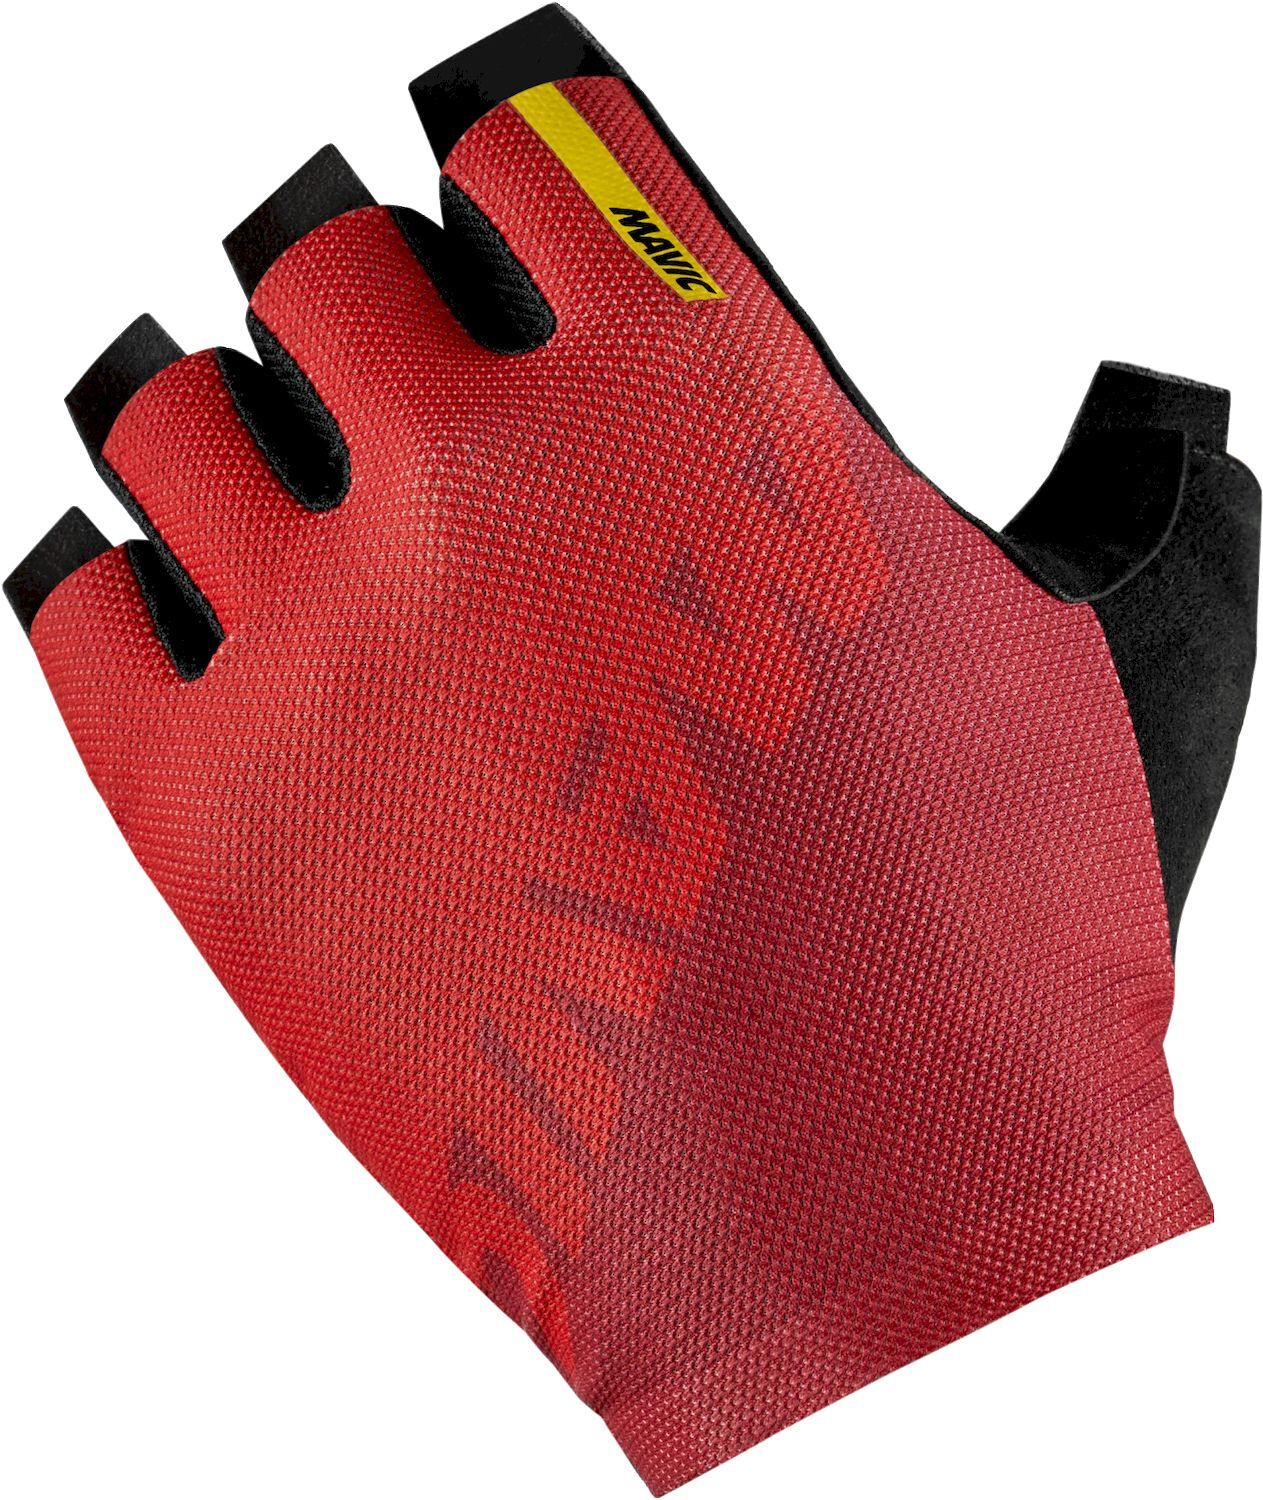 Mavic Cosmic - Cycling gloves